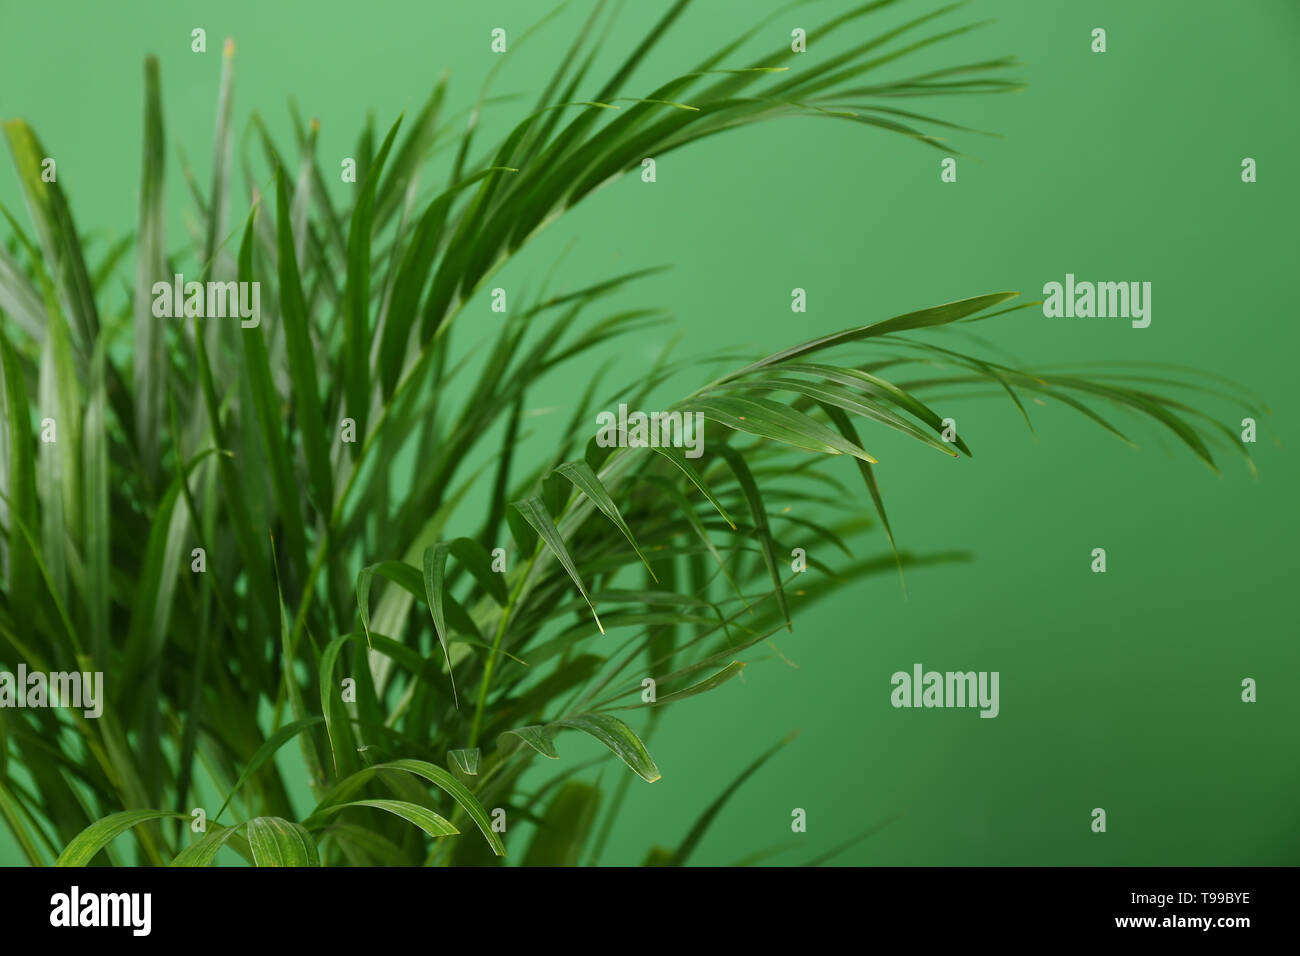 Decorative Areca palm on color background Stock Photo